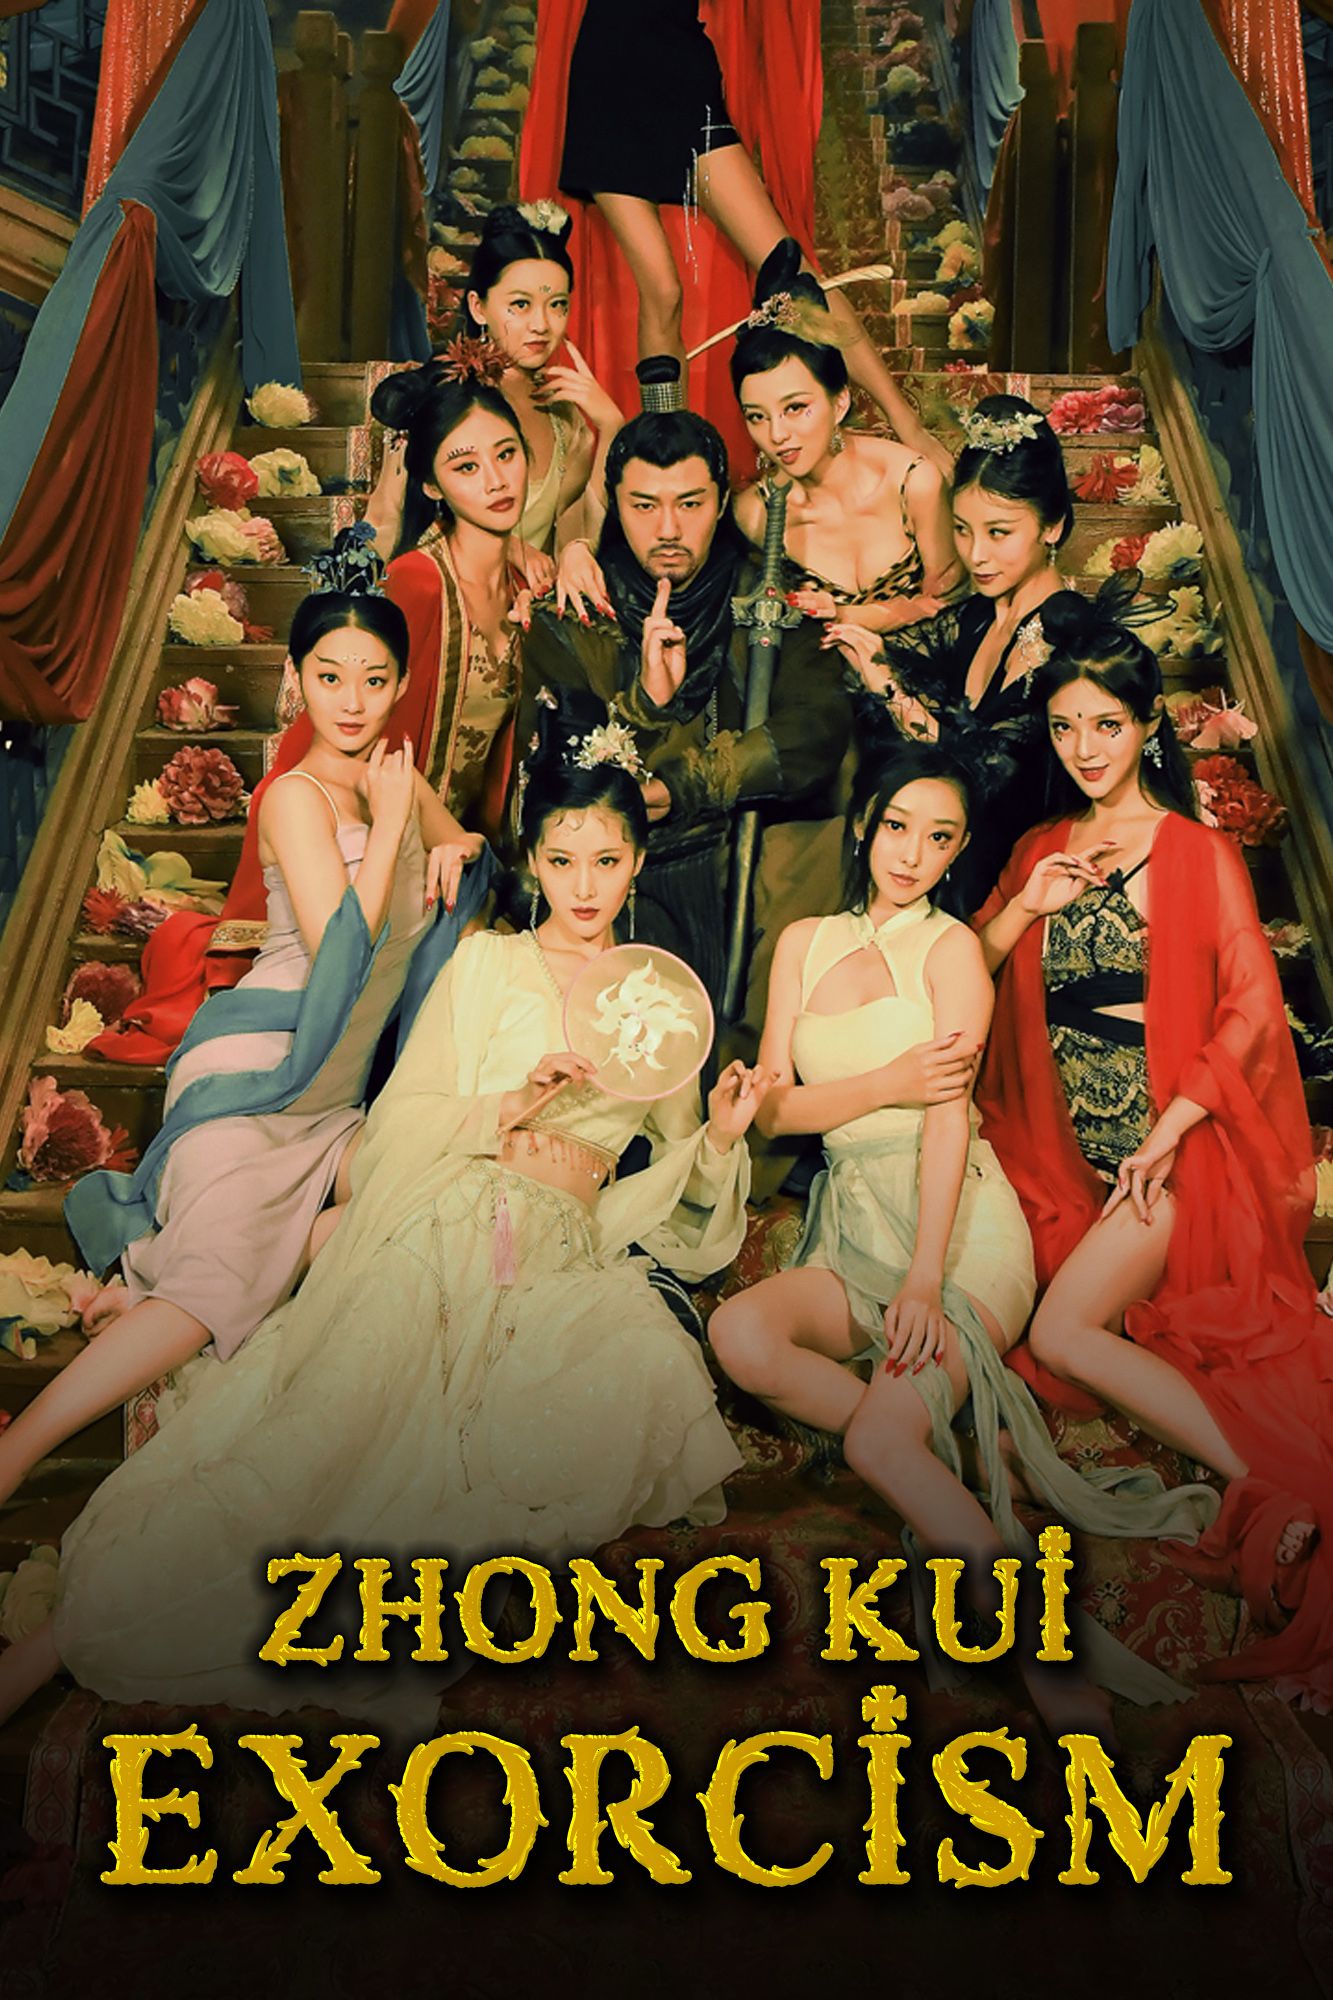 Zhong Kui Exorcism (2022) Hindi Dubbed HDRip download full movie